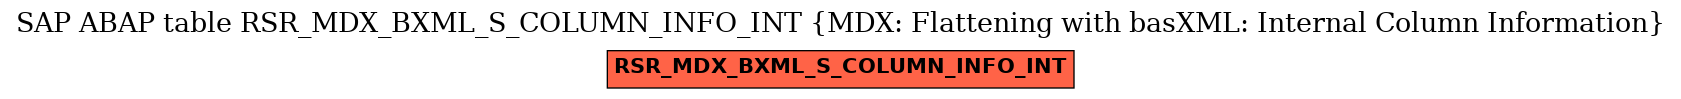 E-R Diagram for table RSR_MDX_BXML_S_COLUMN_INFO_INT (MDX: Flattening with basXML: Internal Column Information)